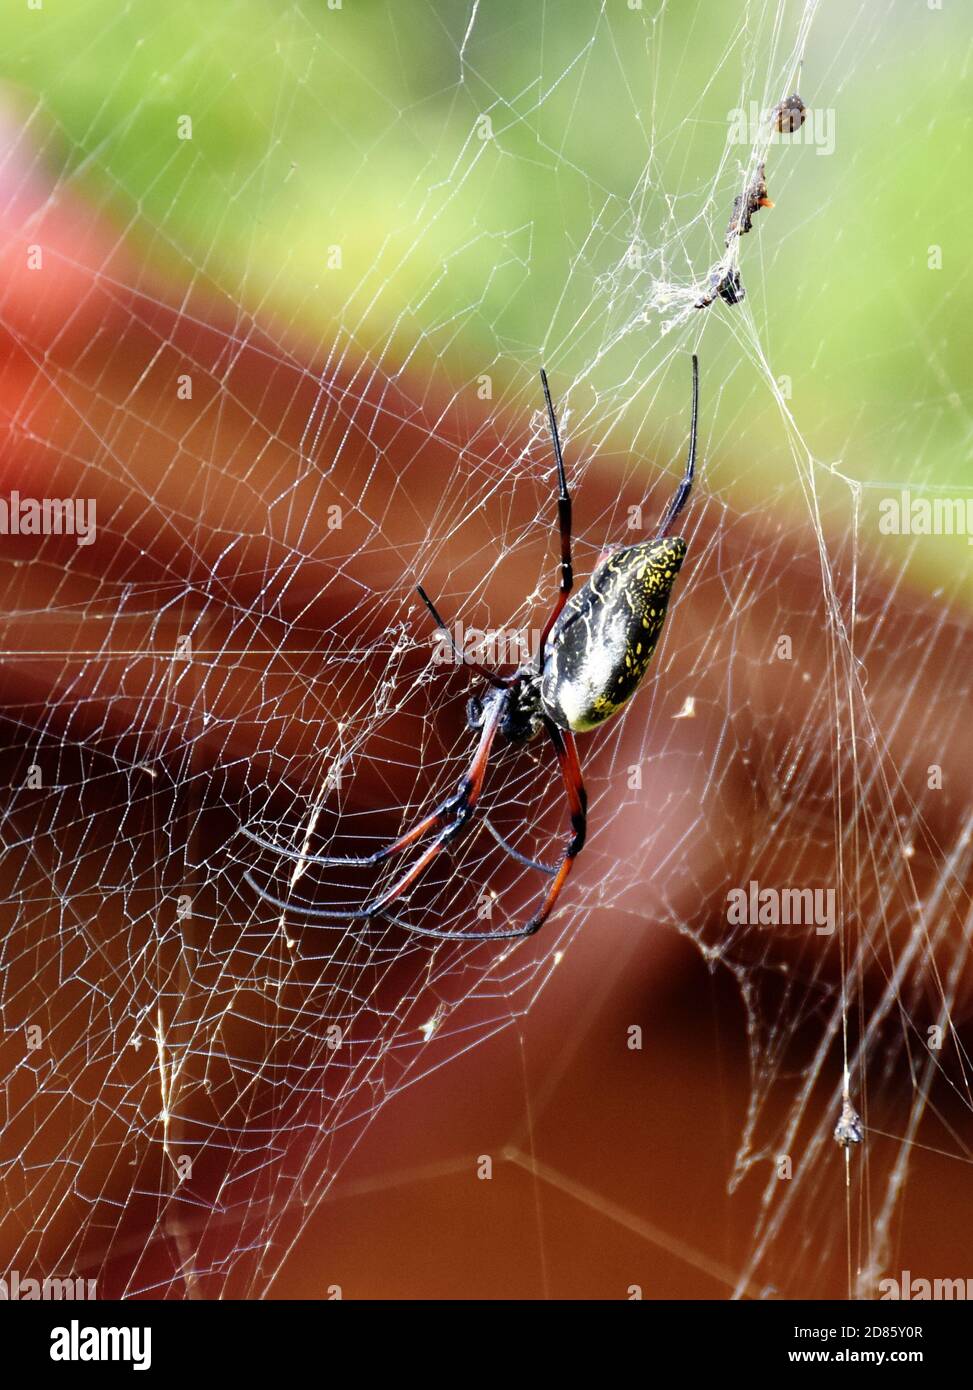 Female big spider Nephila madagascariensis in its web Stock Photo